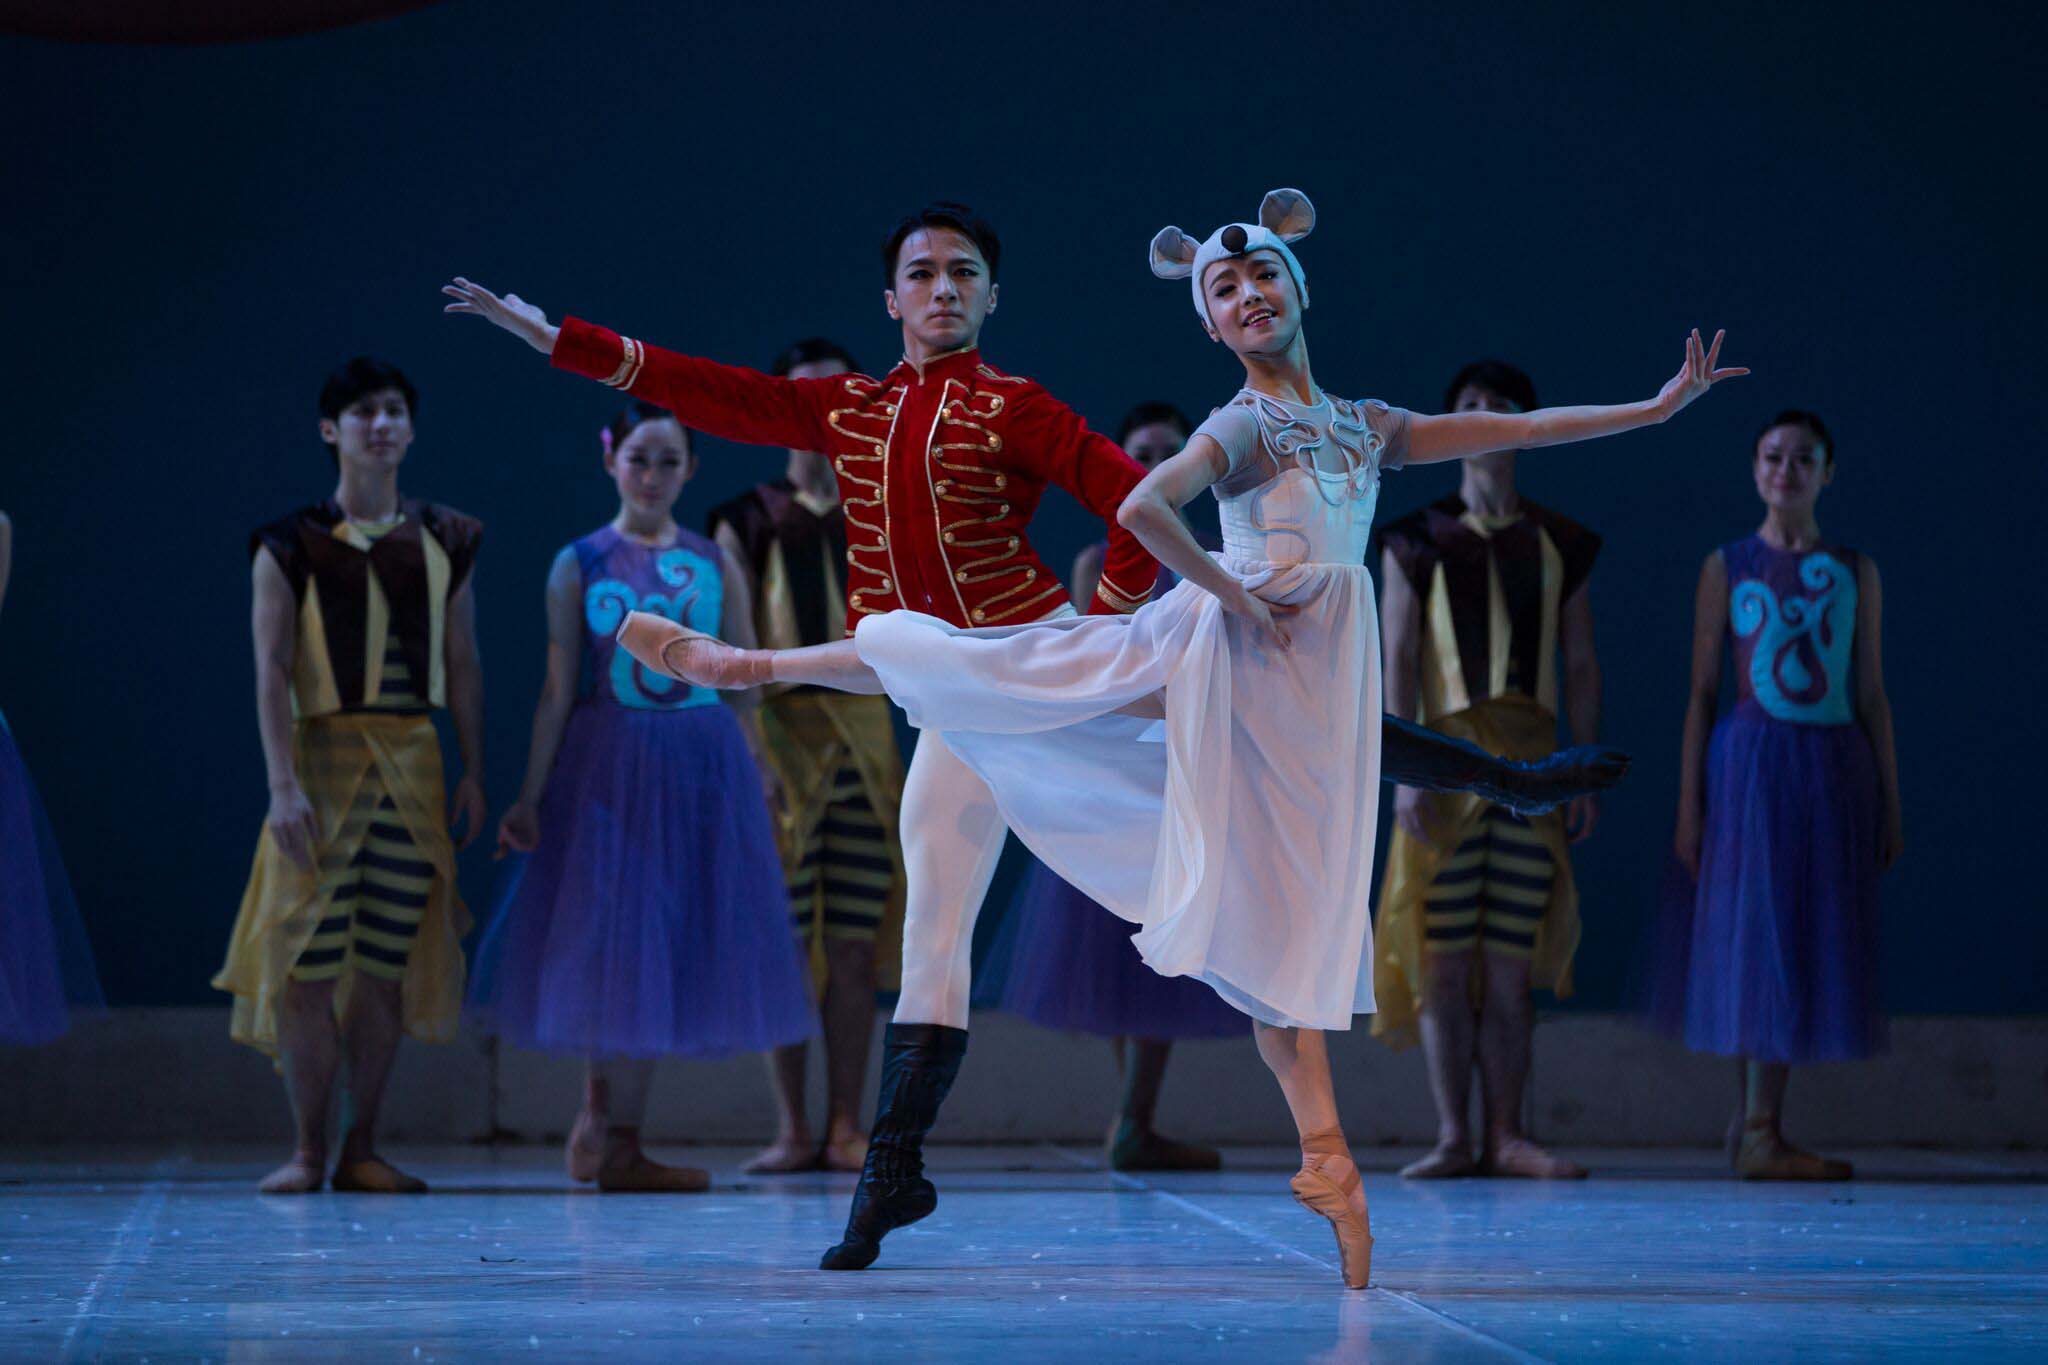 The Suzhou Ballet's production of The Nutcracker